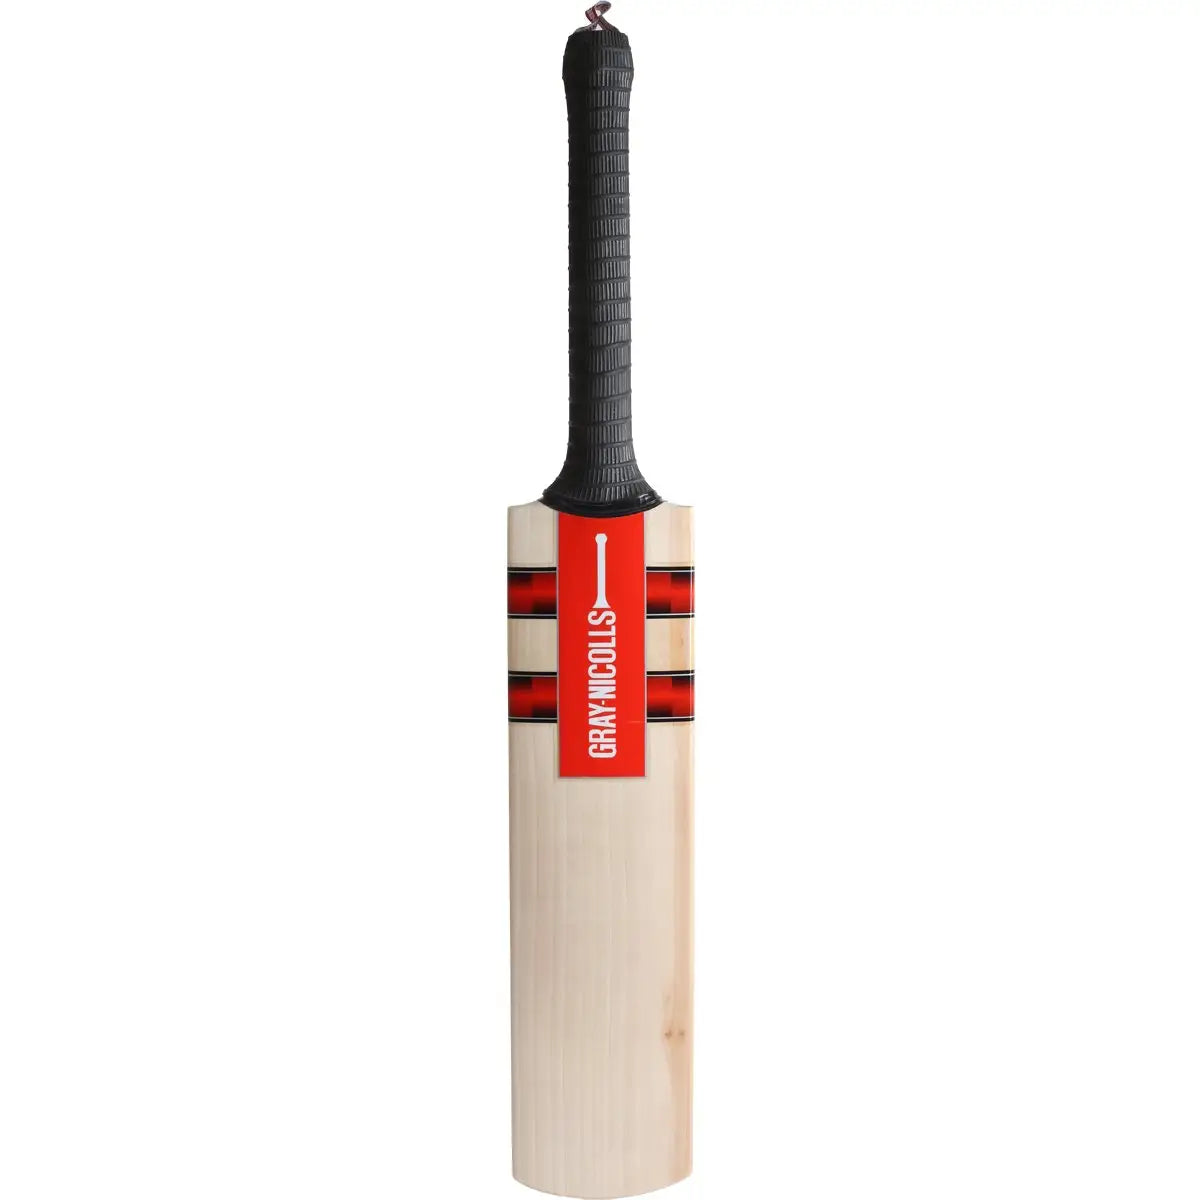 Cricket Bat for Fielding Practice Training Light Weight Short Blade Gray Nicolls - BATS - TRAINING